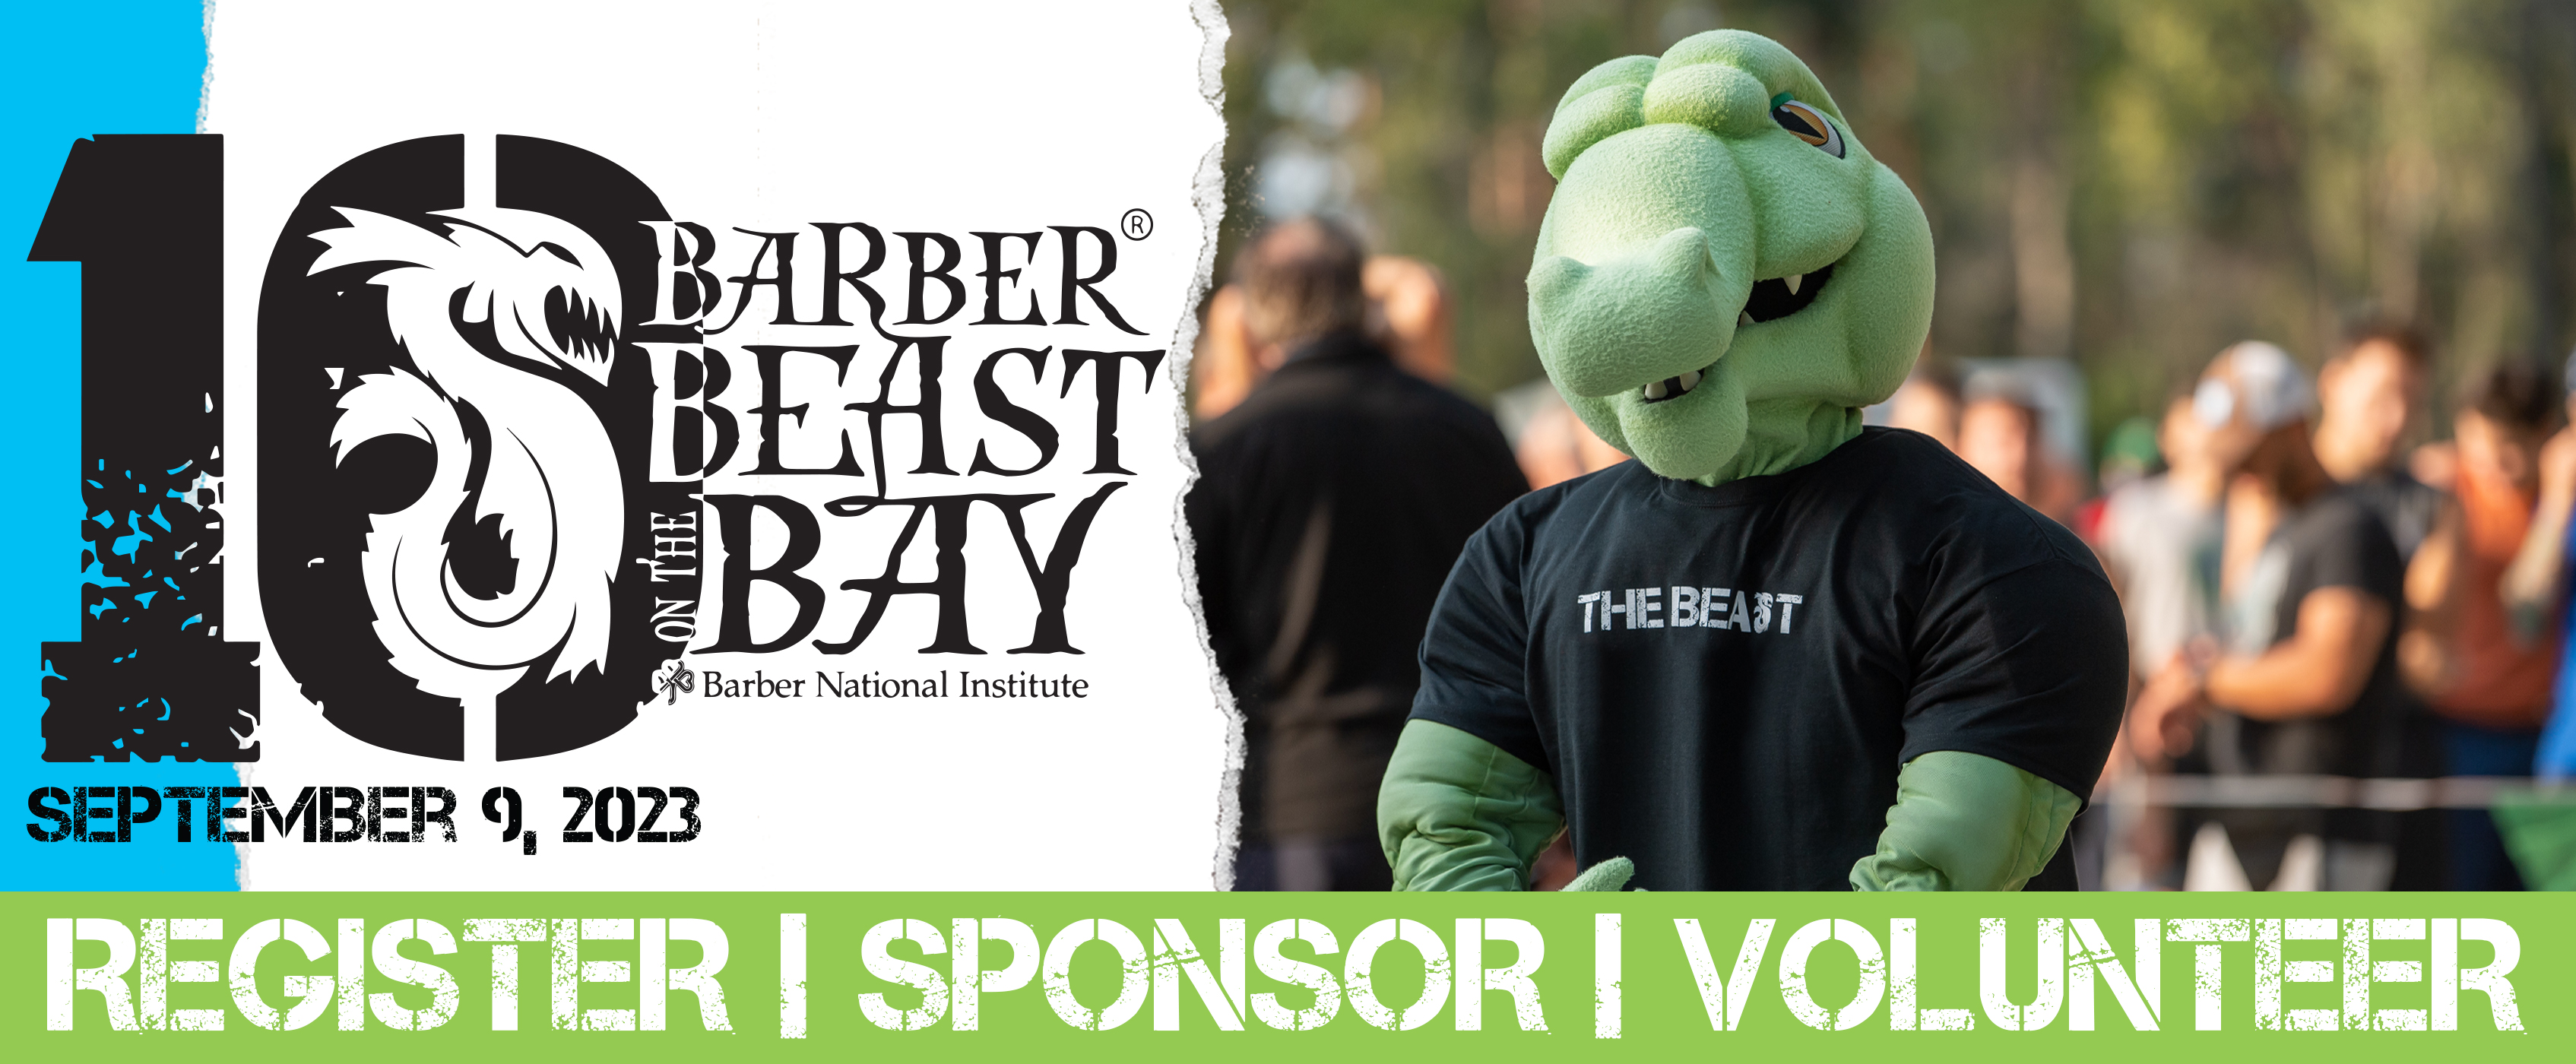 Sponsor the Barber Beast on the Bay